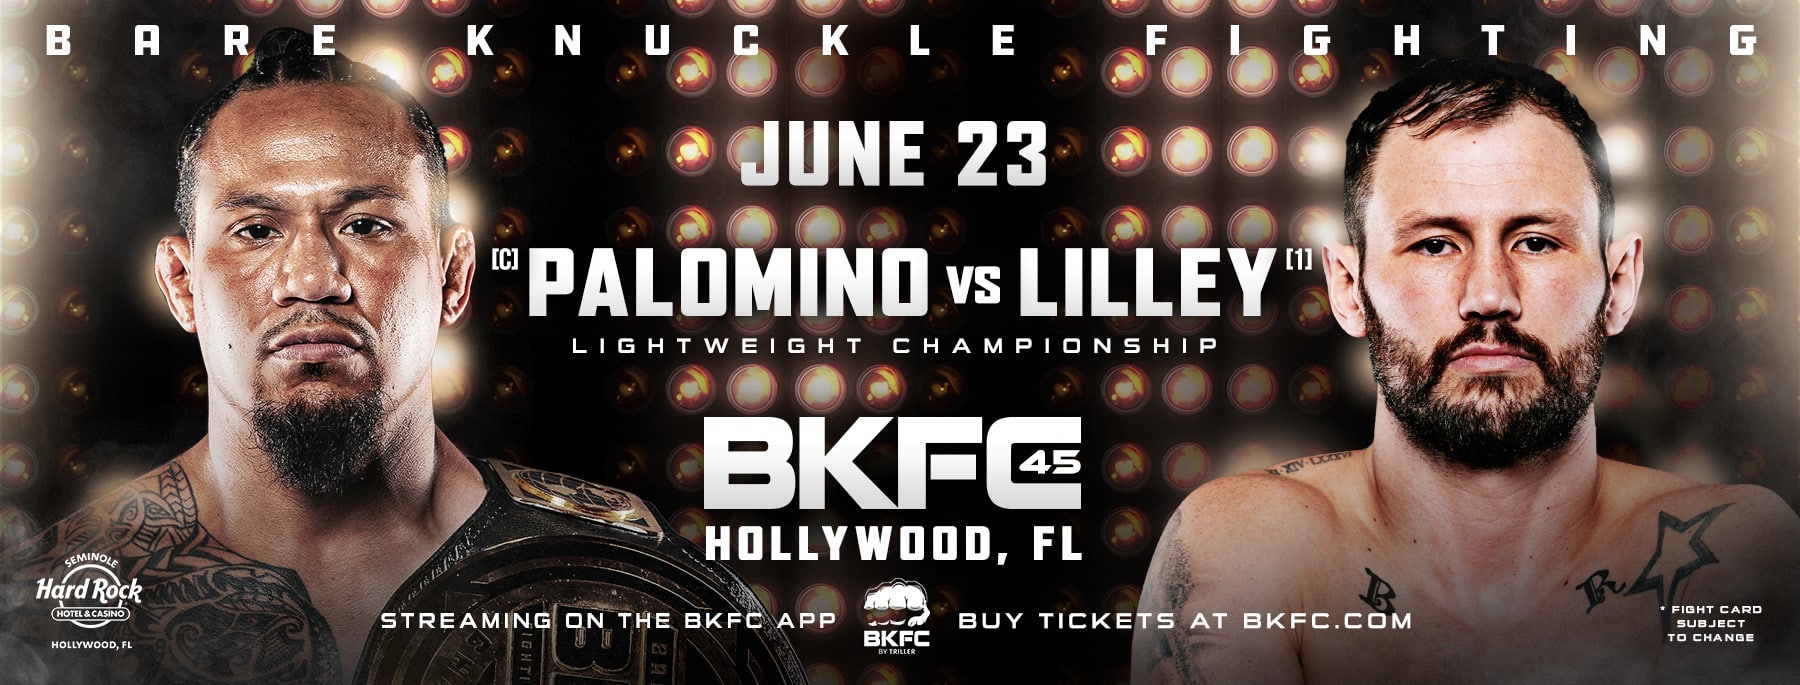 BKFC 45 Palomino vs Lilley Live Fight Thread » Inside Fighting